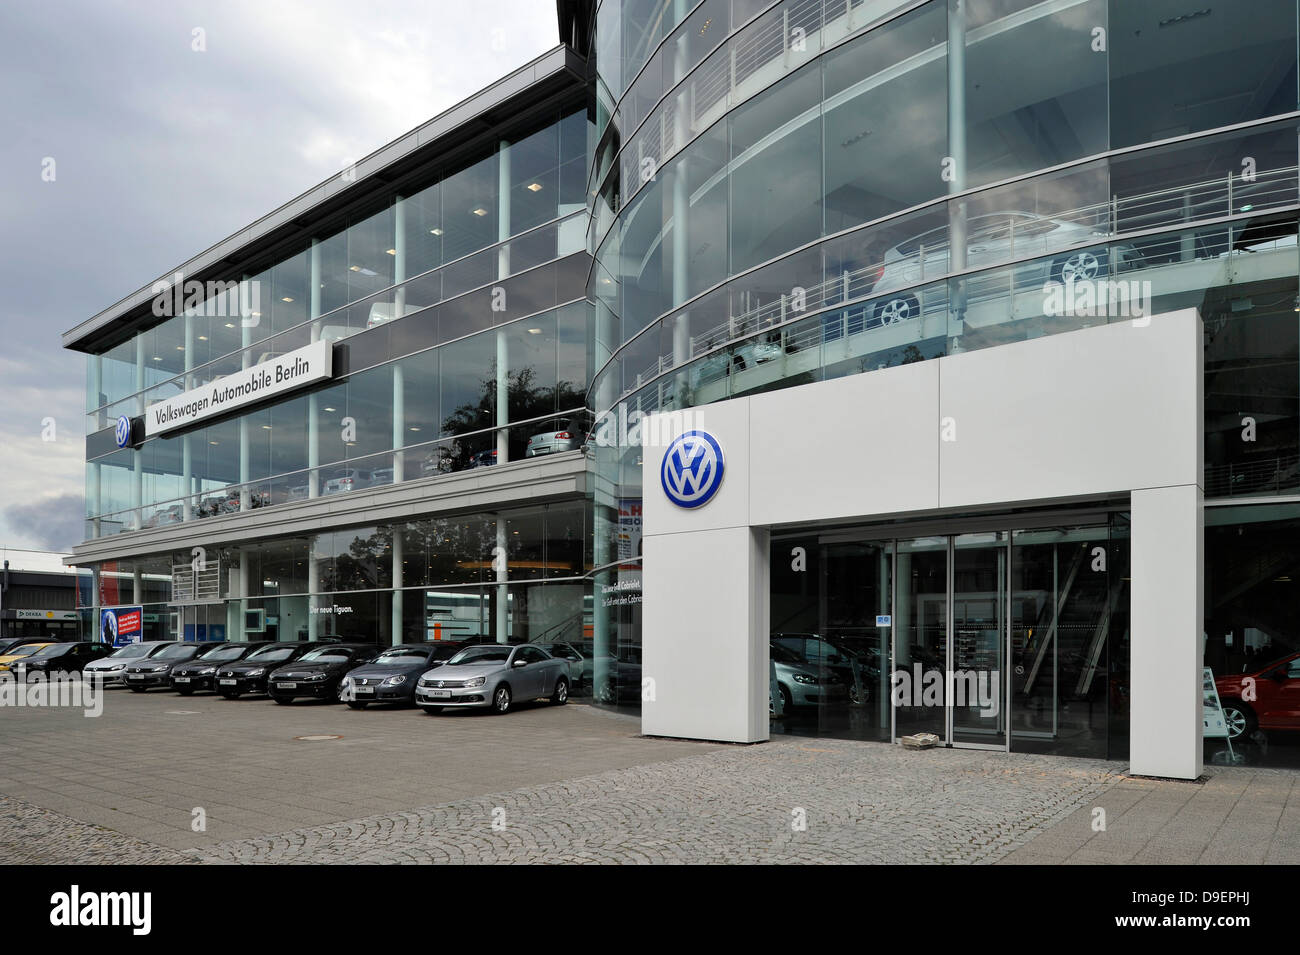 Volkswagen automobile Berlin headquarters, Franklinstrasse, Berlin, Germany, Europe Stock Photo